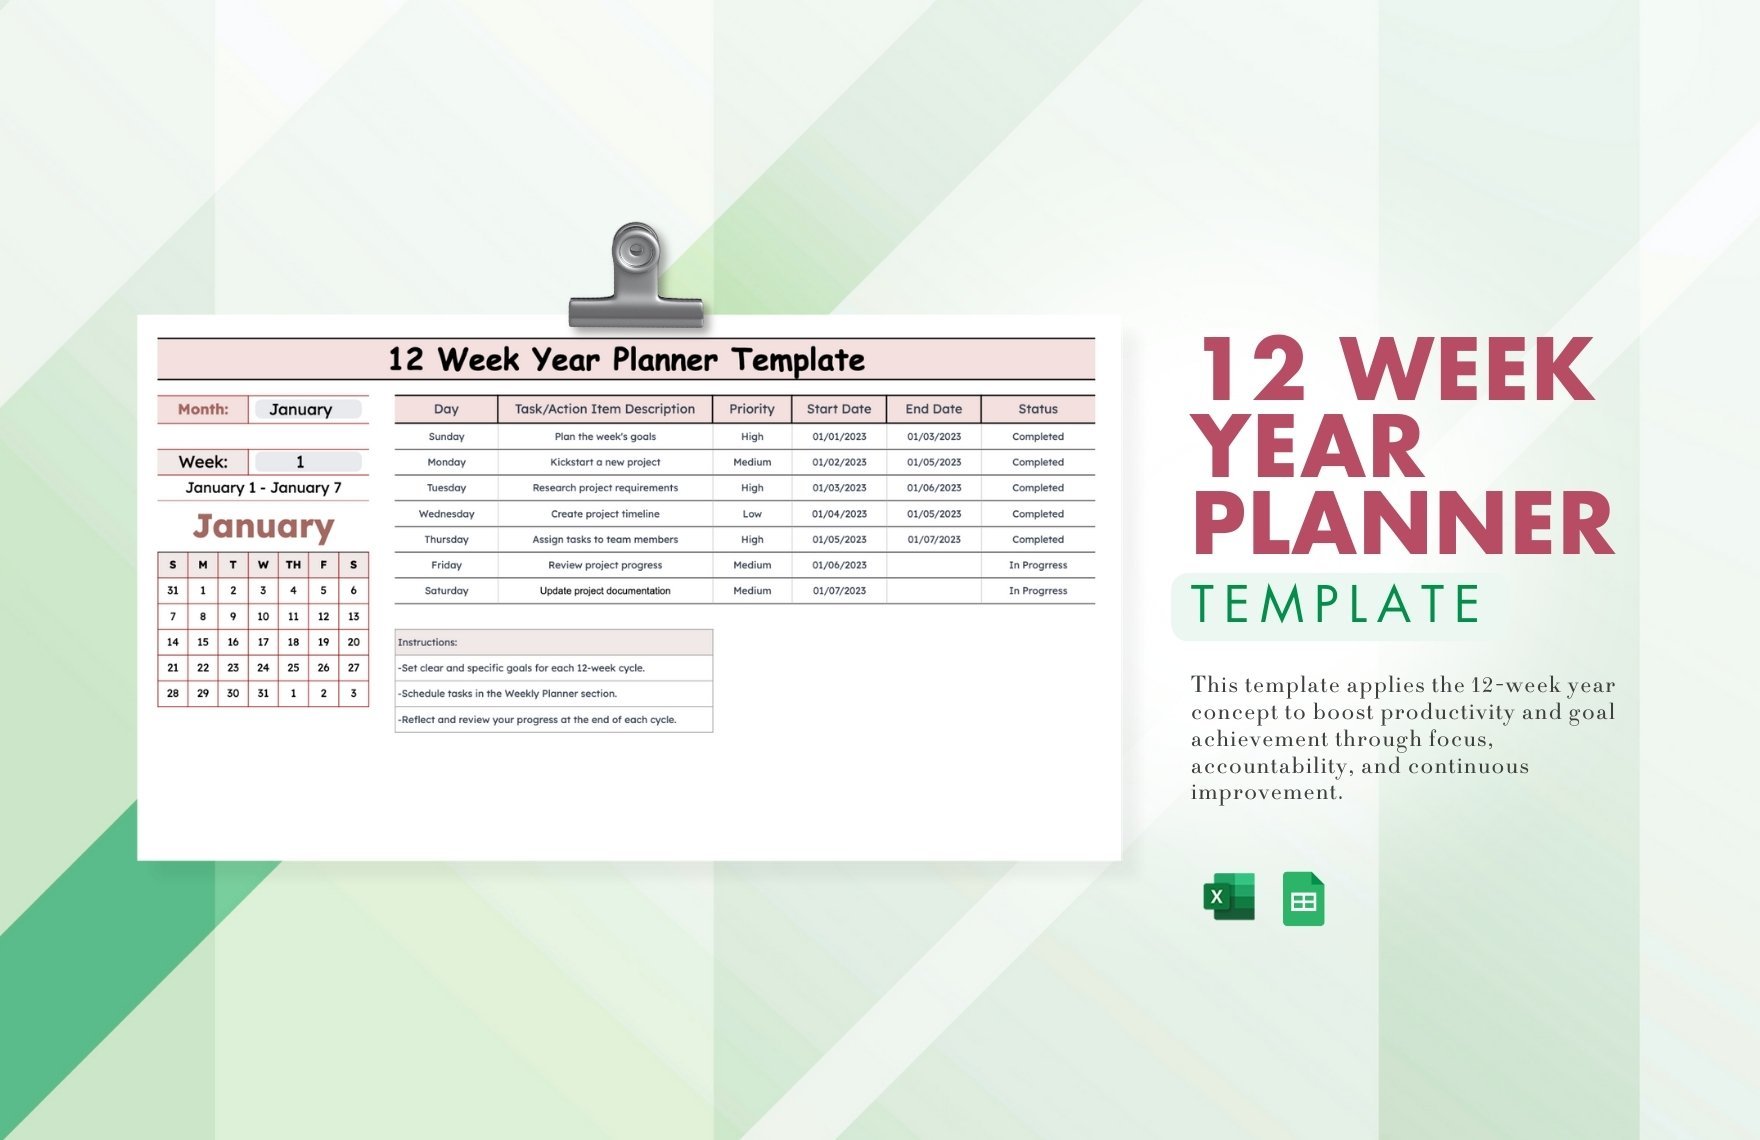 12 Week Year Planner Template in Excel, Google Sheets